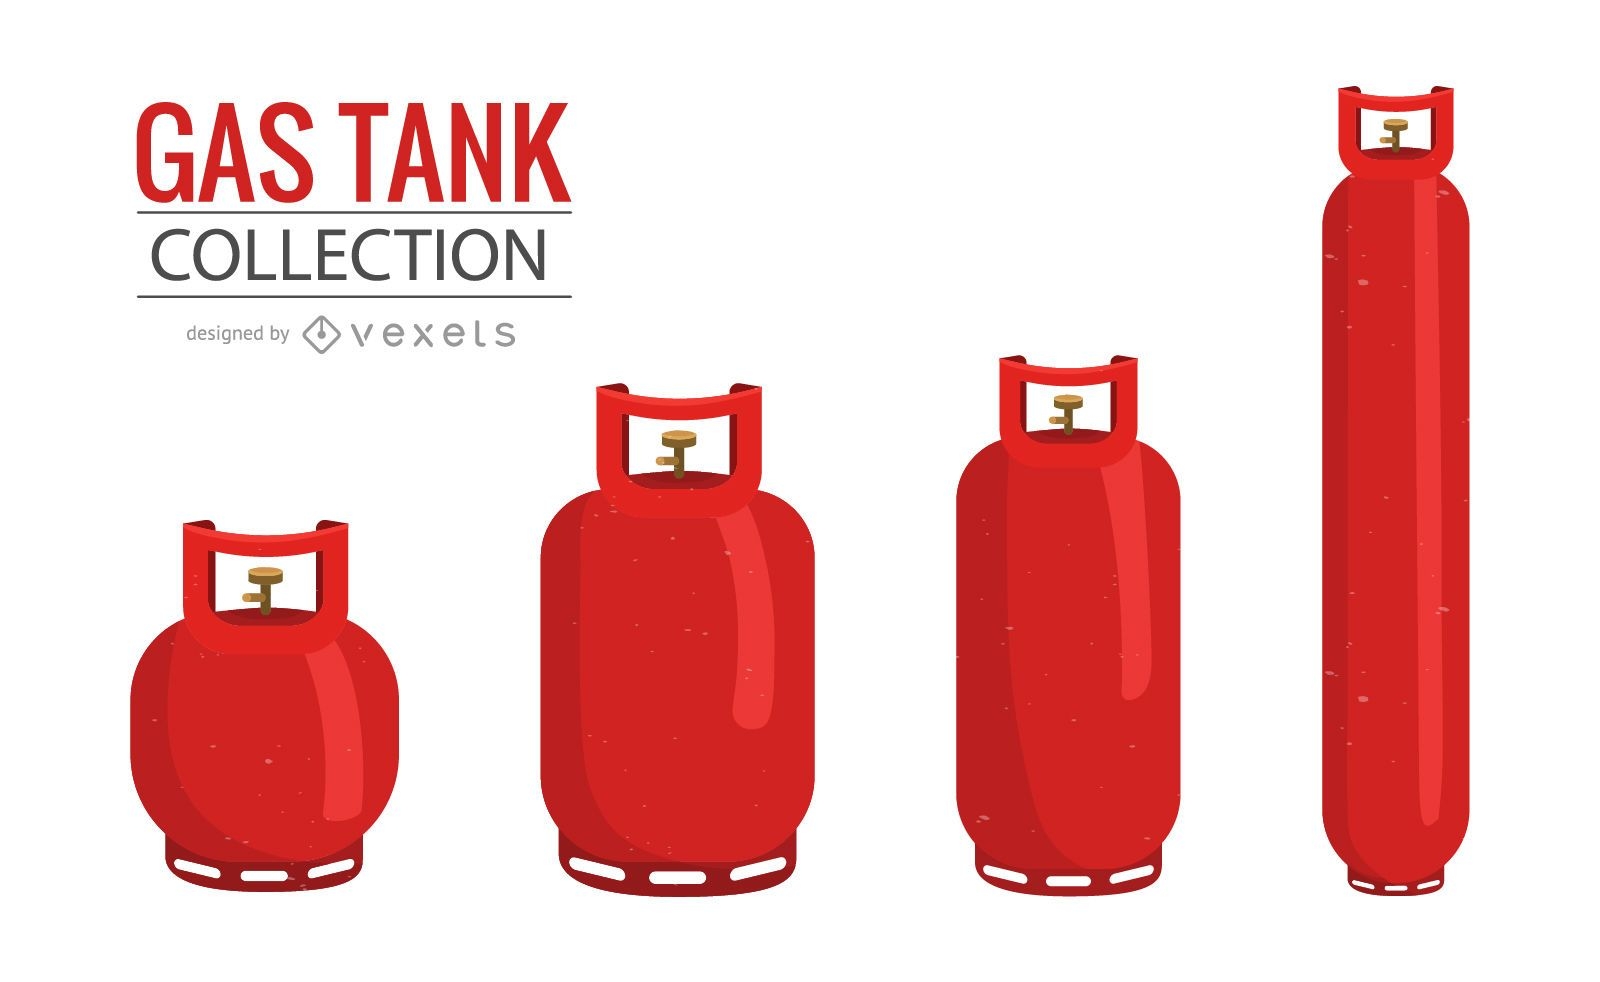 Gas tank illustration collection